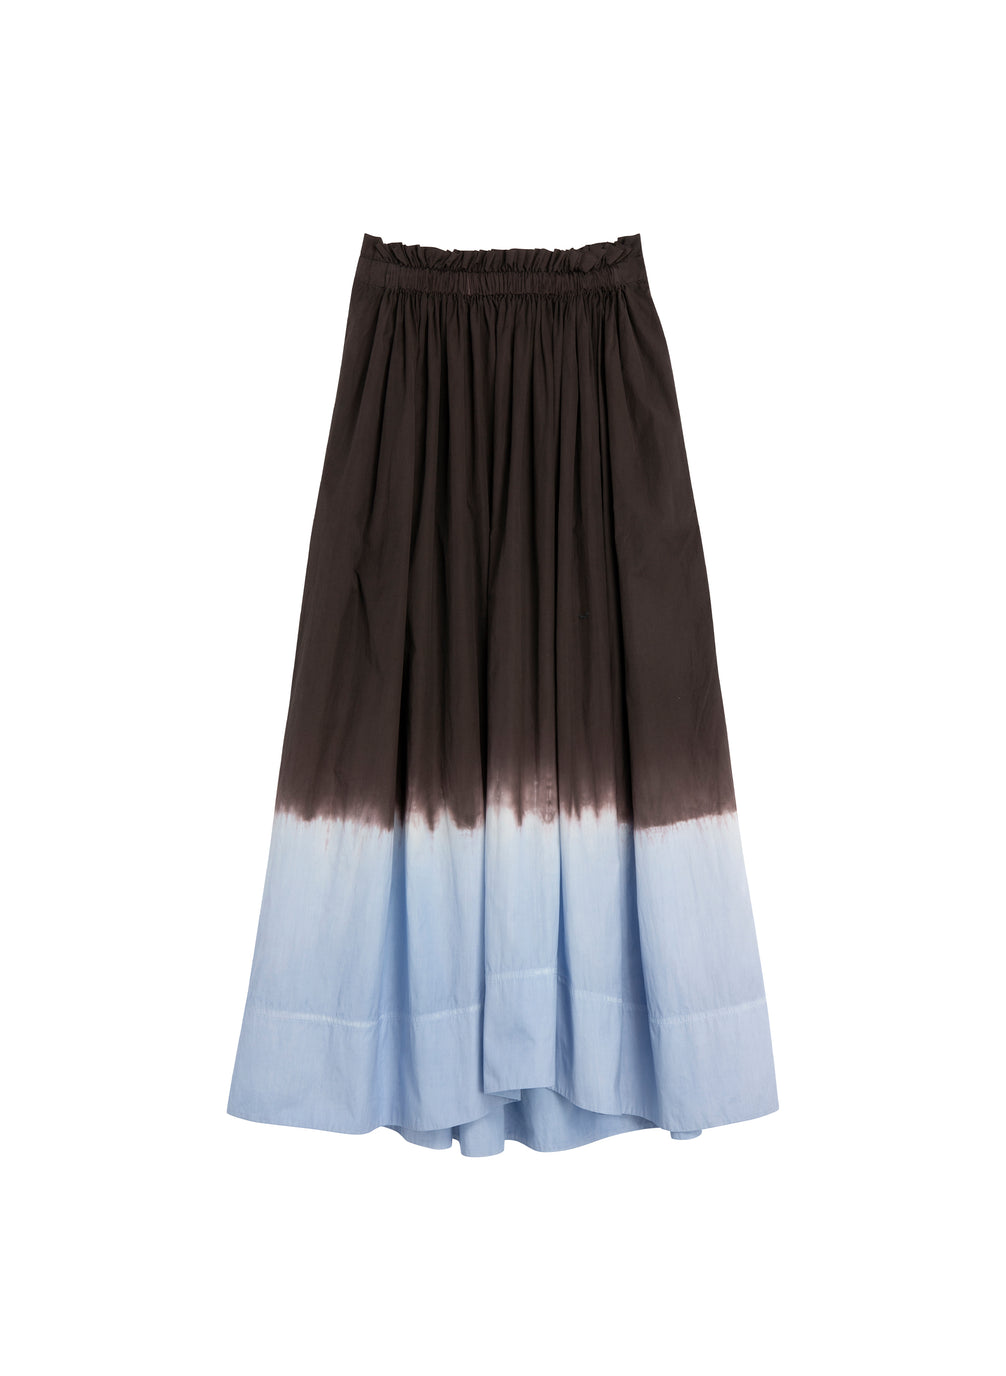 flatlay of brown and light blue dip dye midi skirt